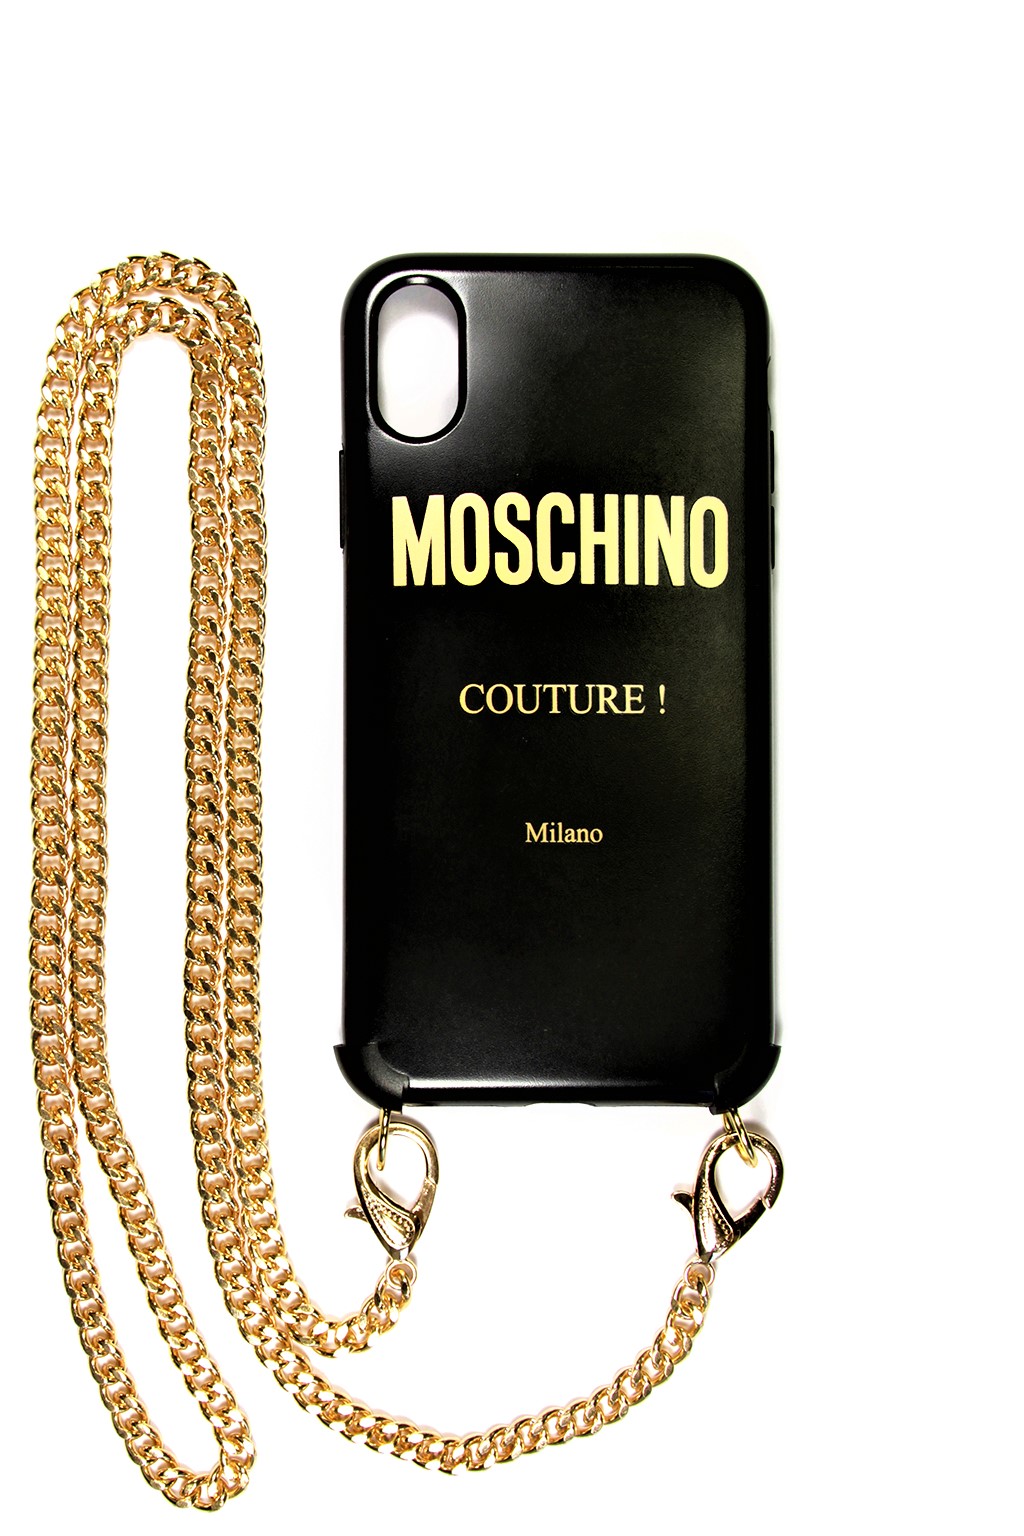 moschino phone case x